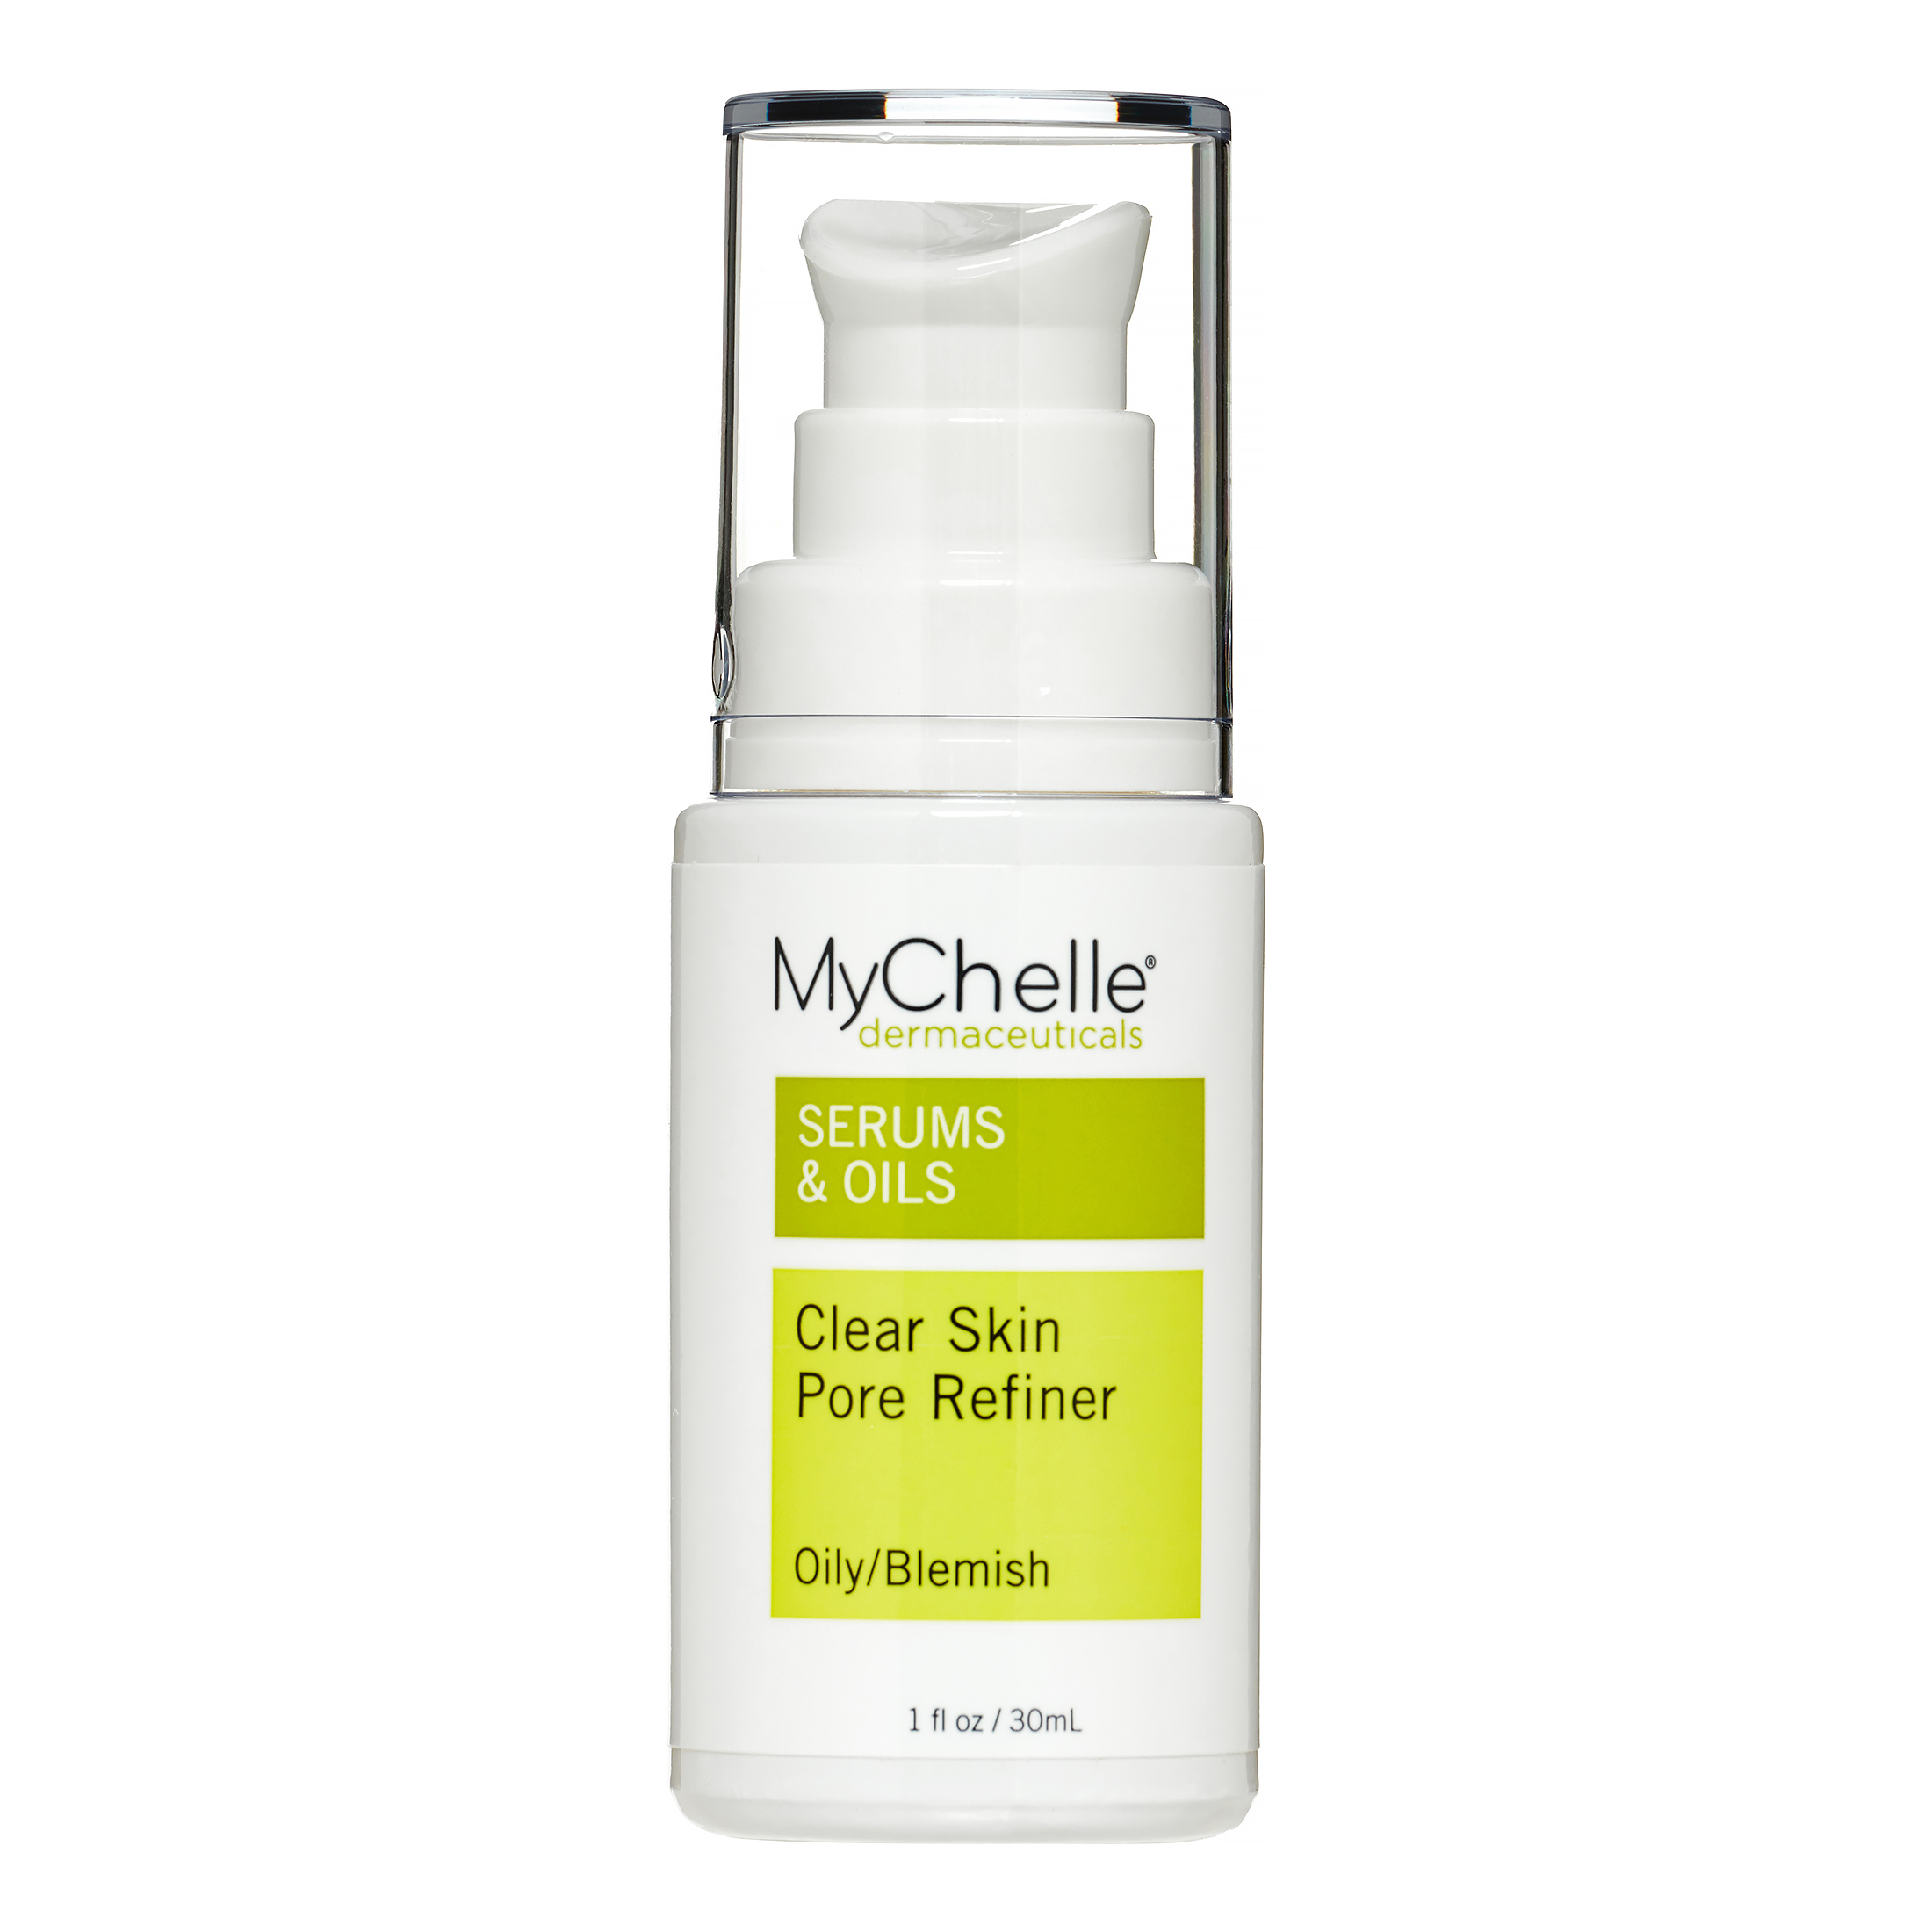 MyChelle Clear Skin Pore Refiner, 1 Oz - image 1 of 12